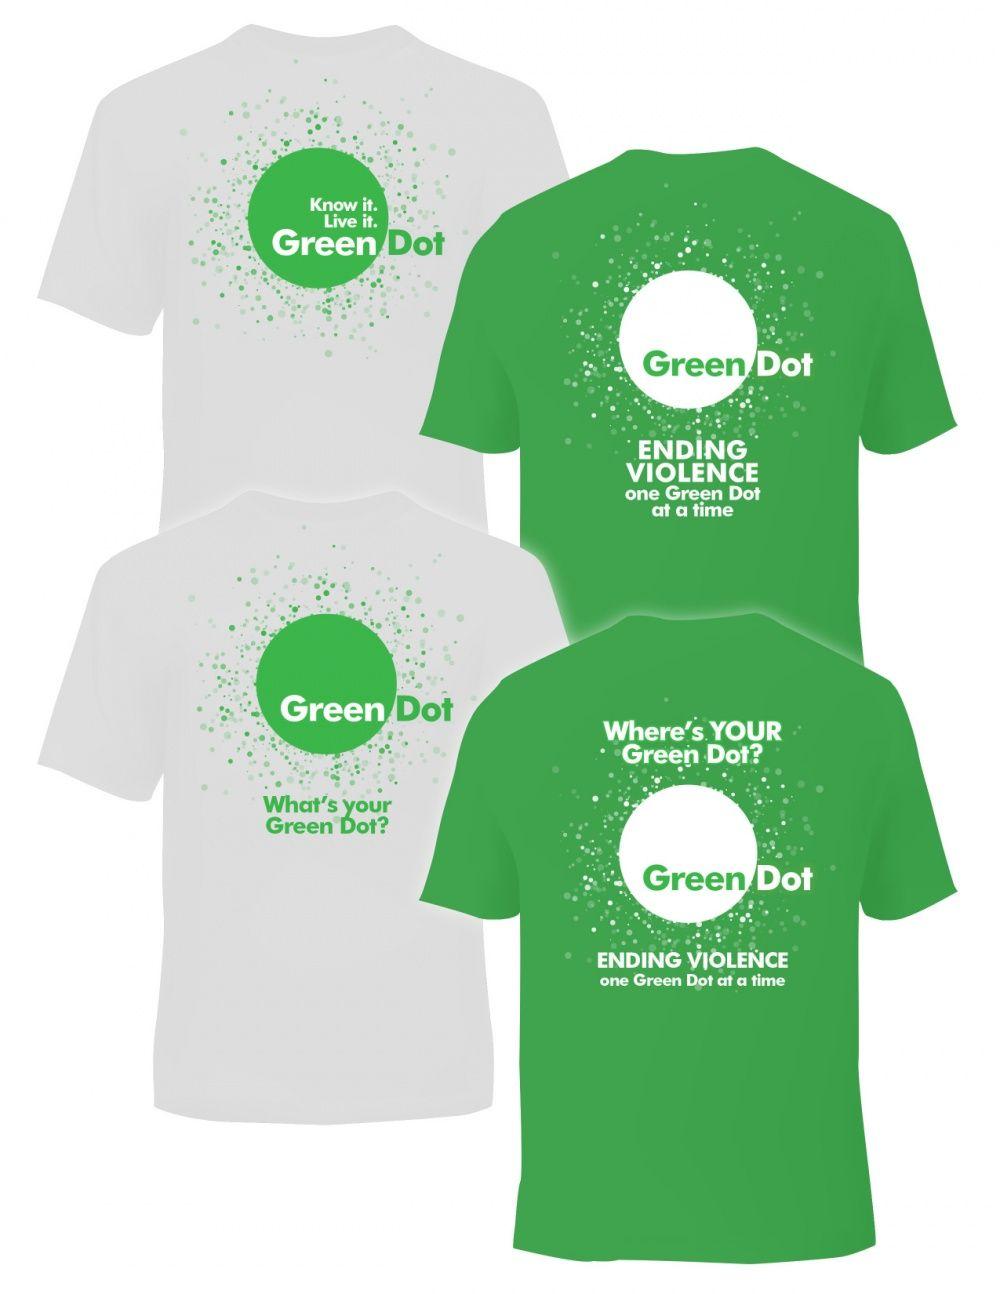 Green Dot Logo - DVIDS - Images - Green Dot – Logo and t-shirts branding [Image 6 of 16]